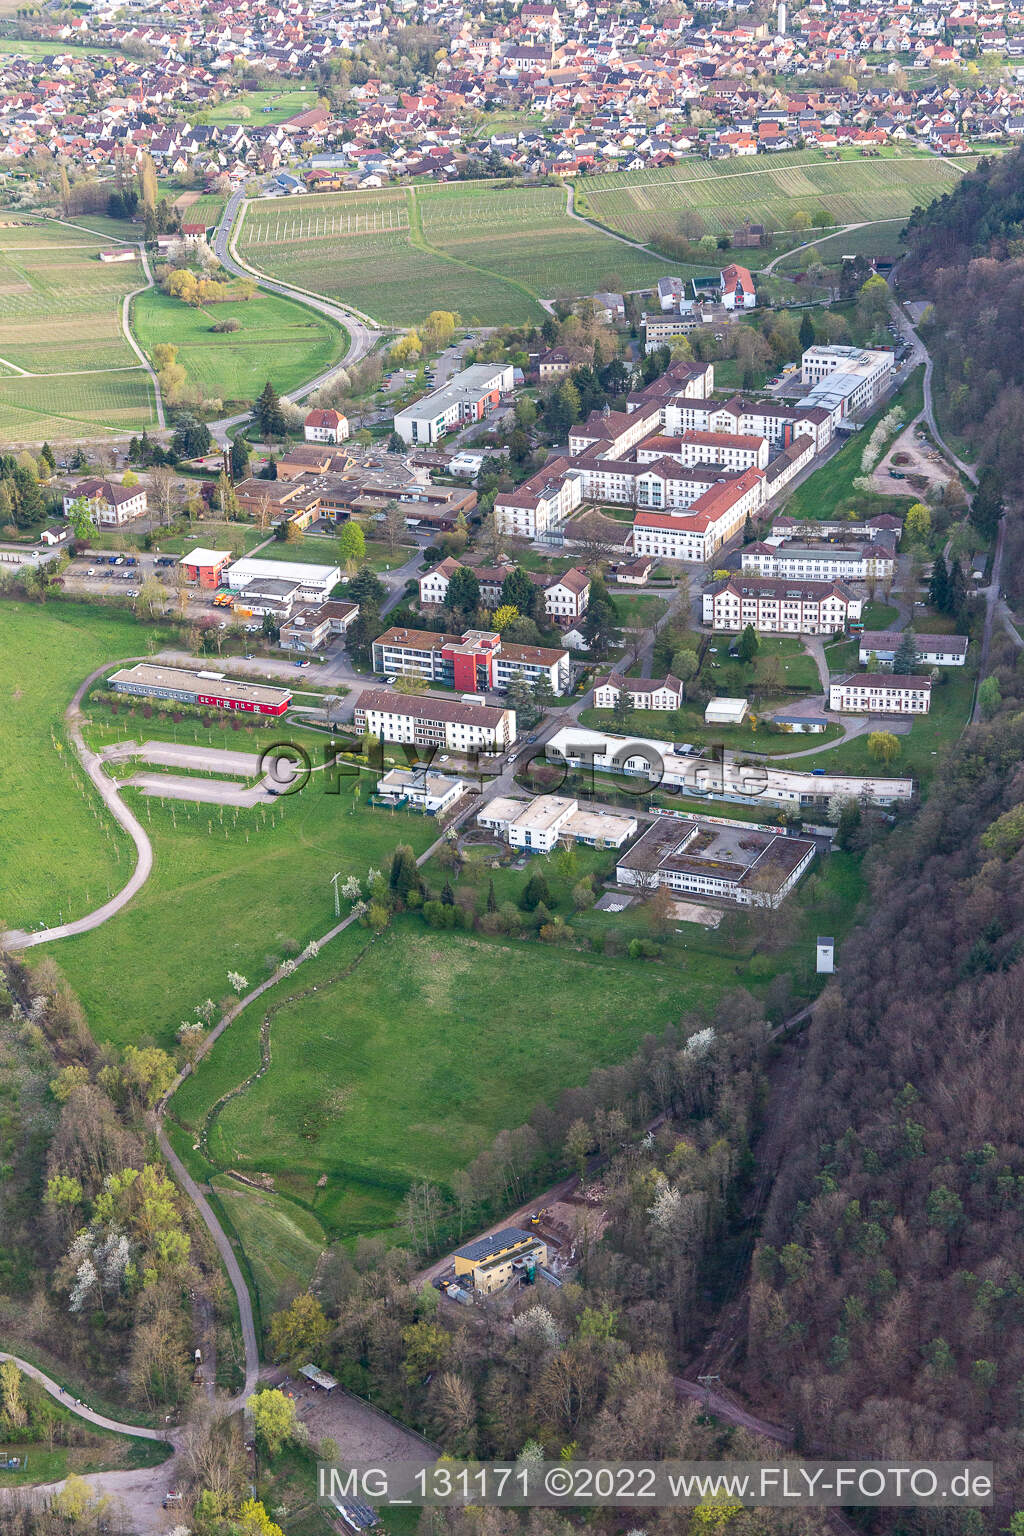 Palatinate Clinic Landeck in Waldhambach in the state Rhineland-Palatinate, Germany